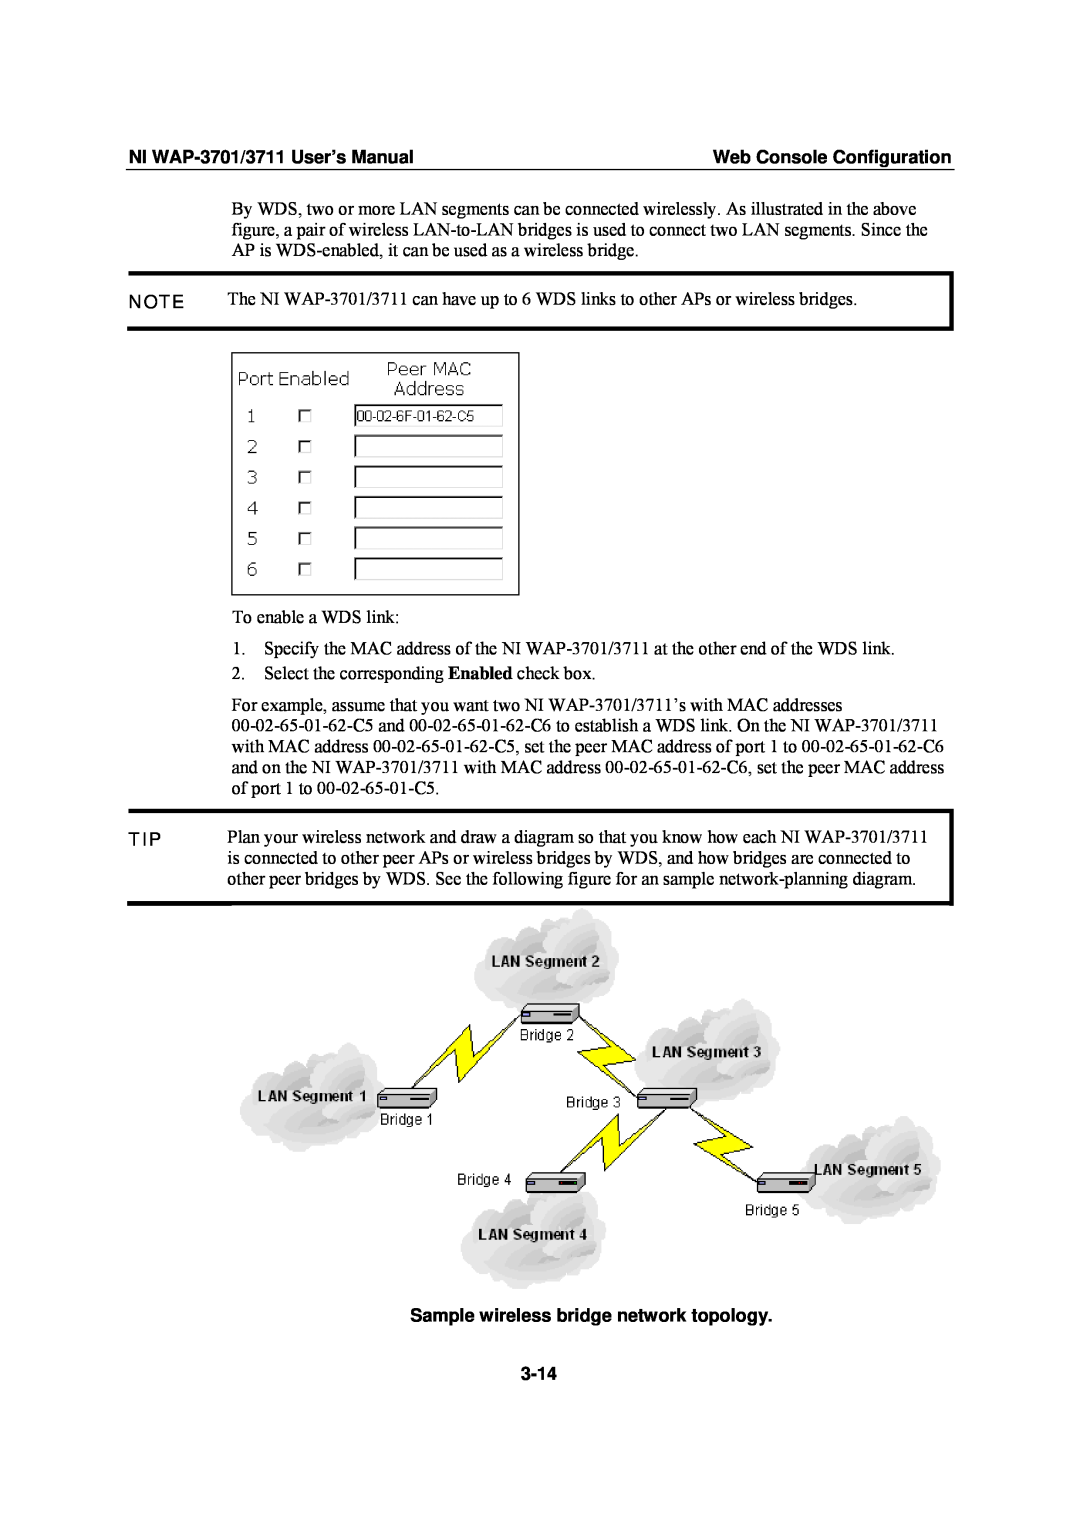 National Instruments NI WAP-3701/3711 User’s Manual, Web Console Configuration, Sample wireless bridge network topology 